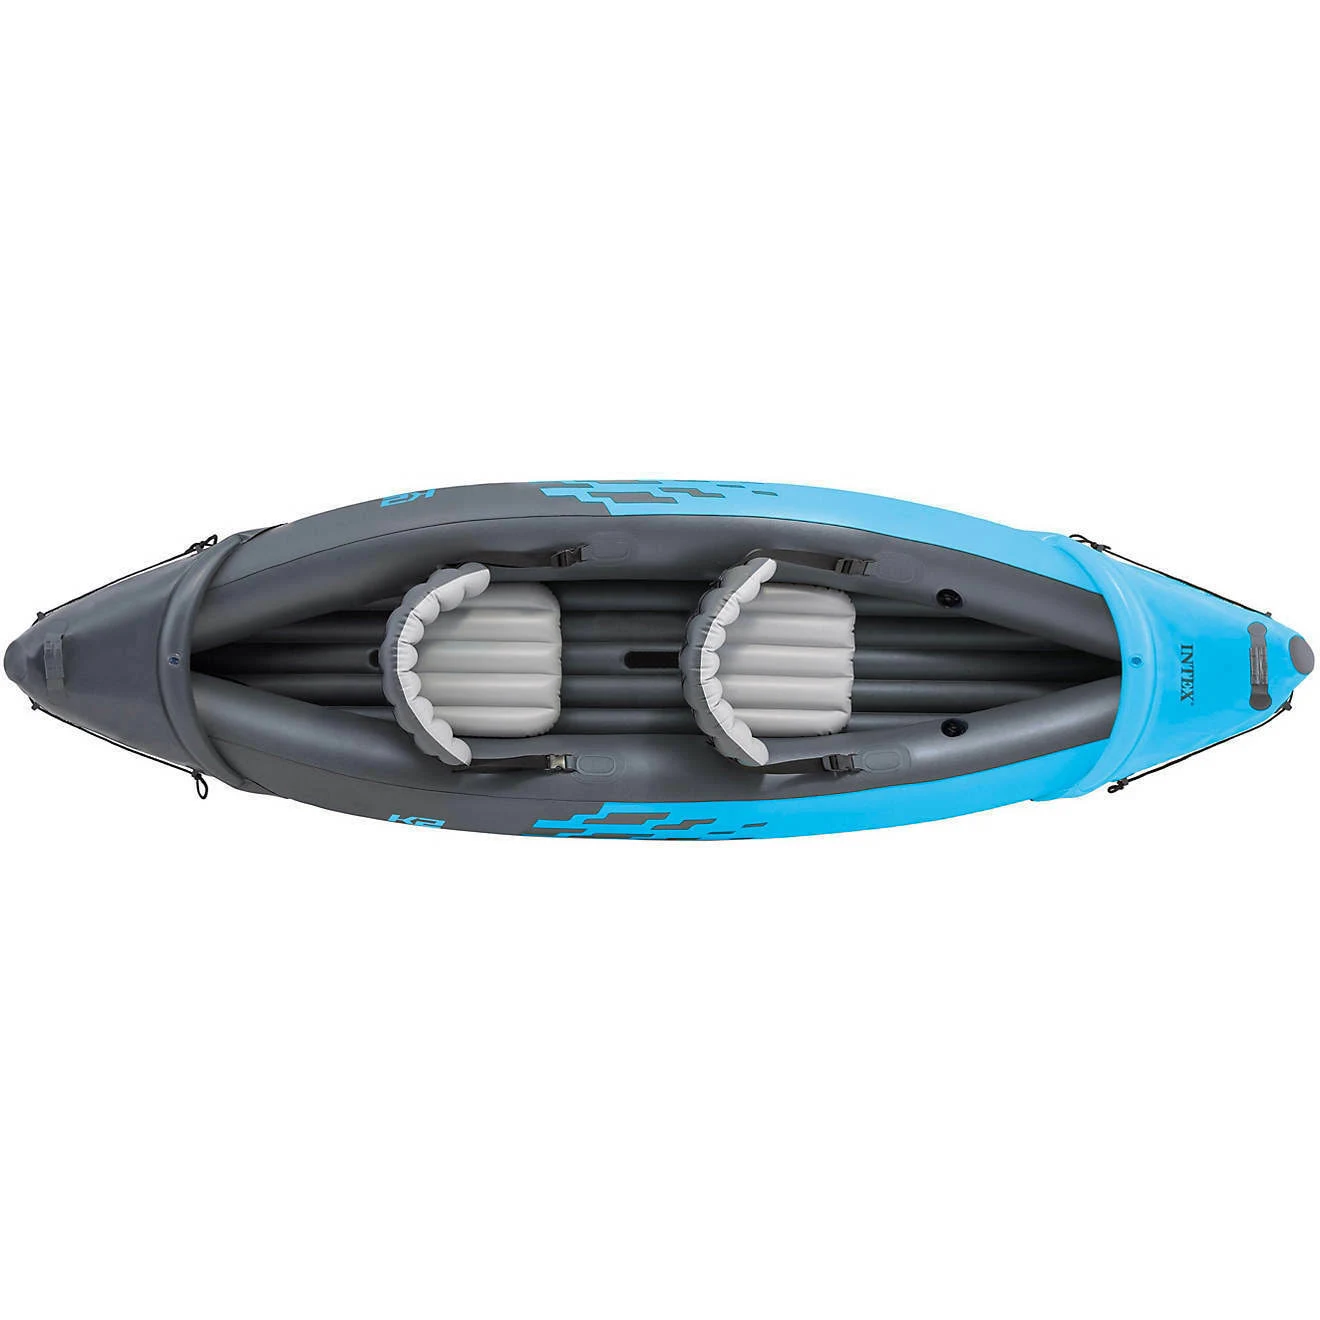 Intex Sport Series Tacoma K2 10 Ft 3 In Inflatable Kayak